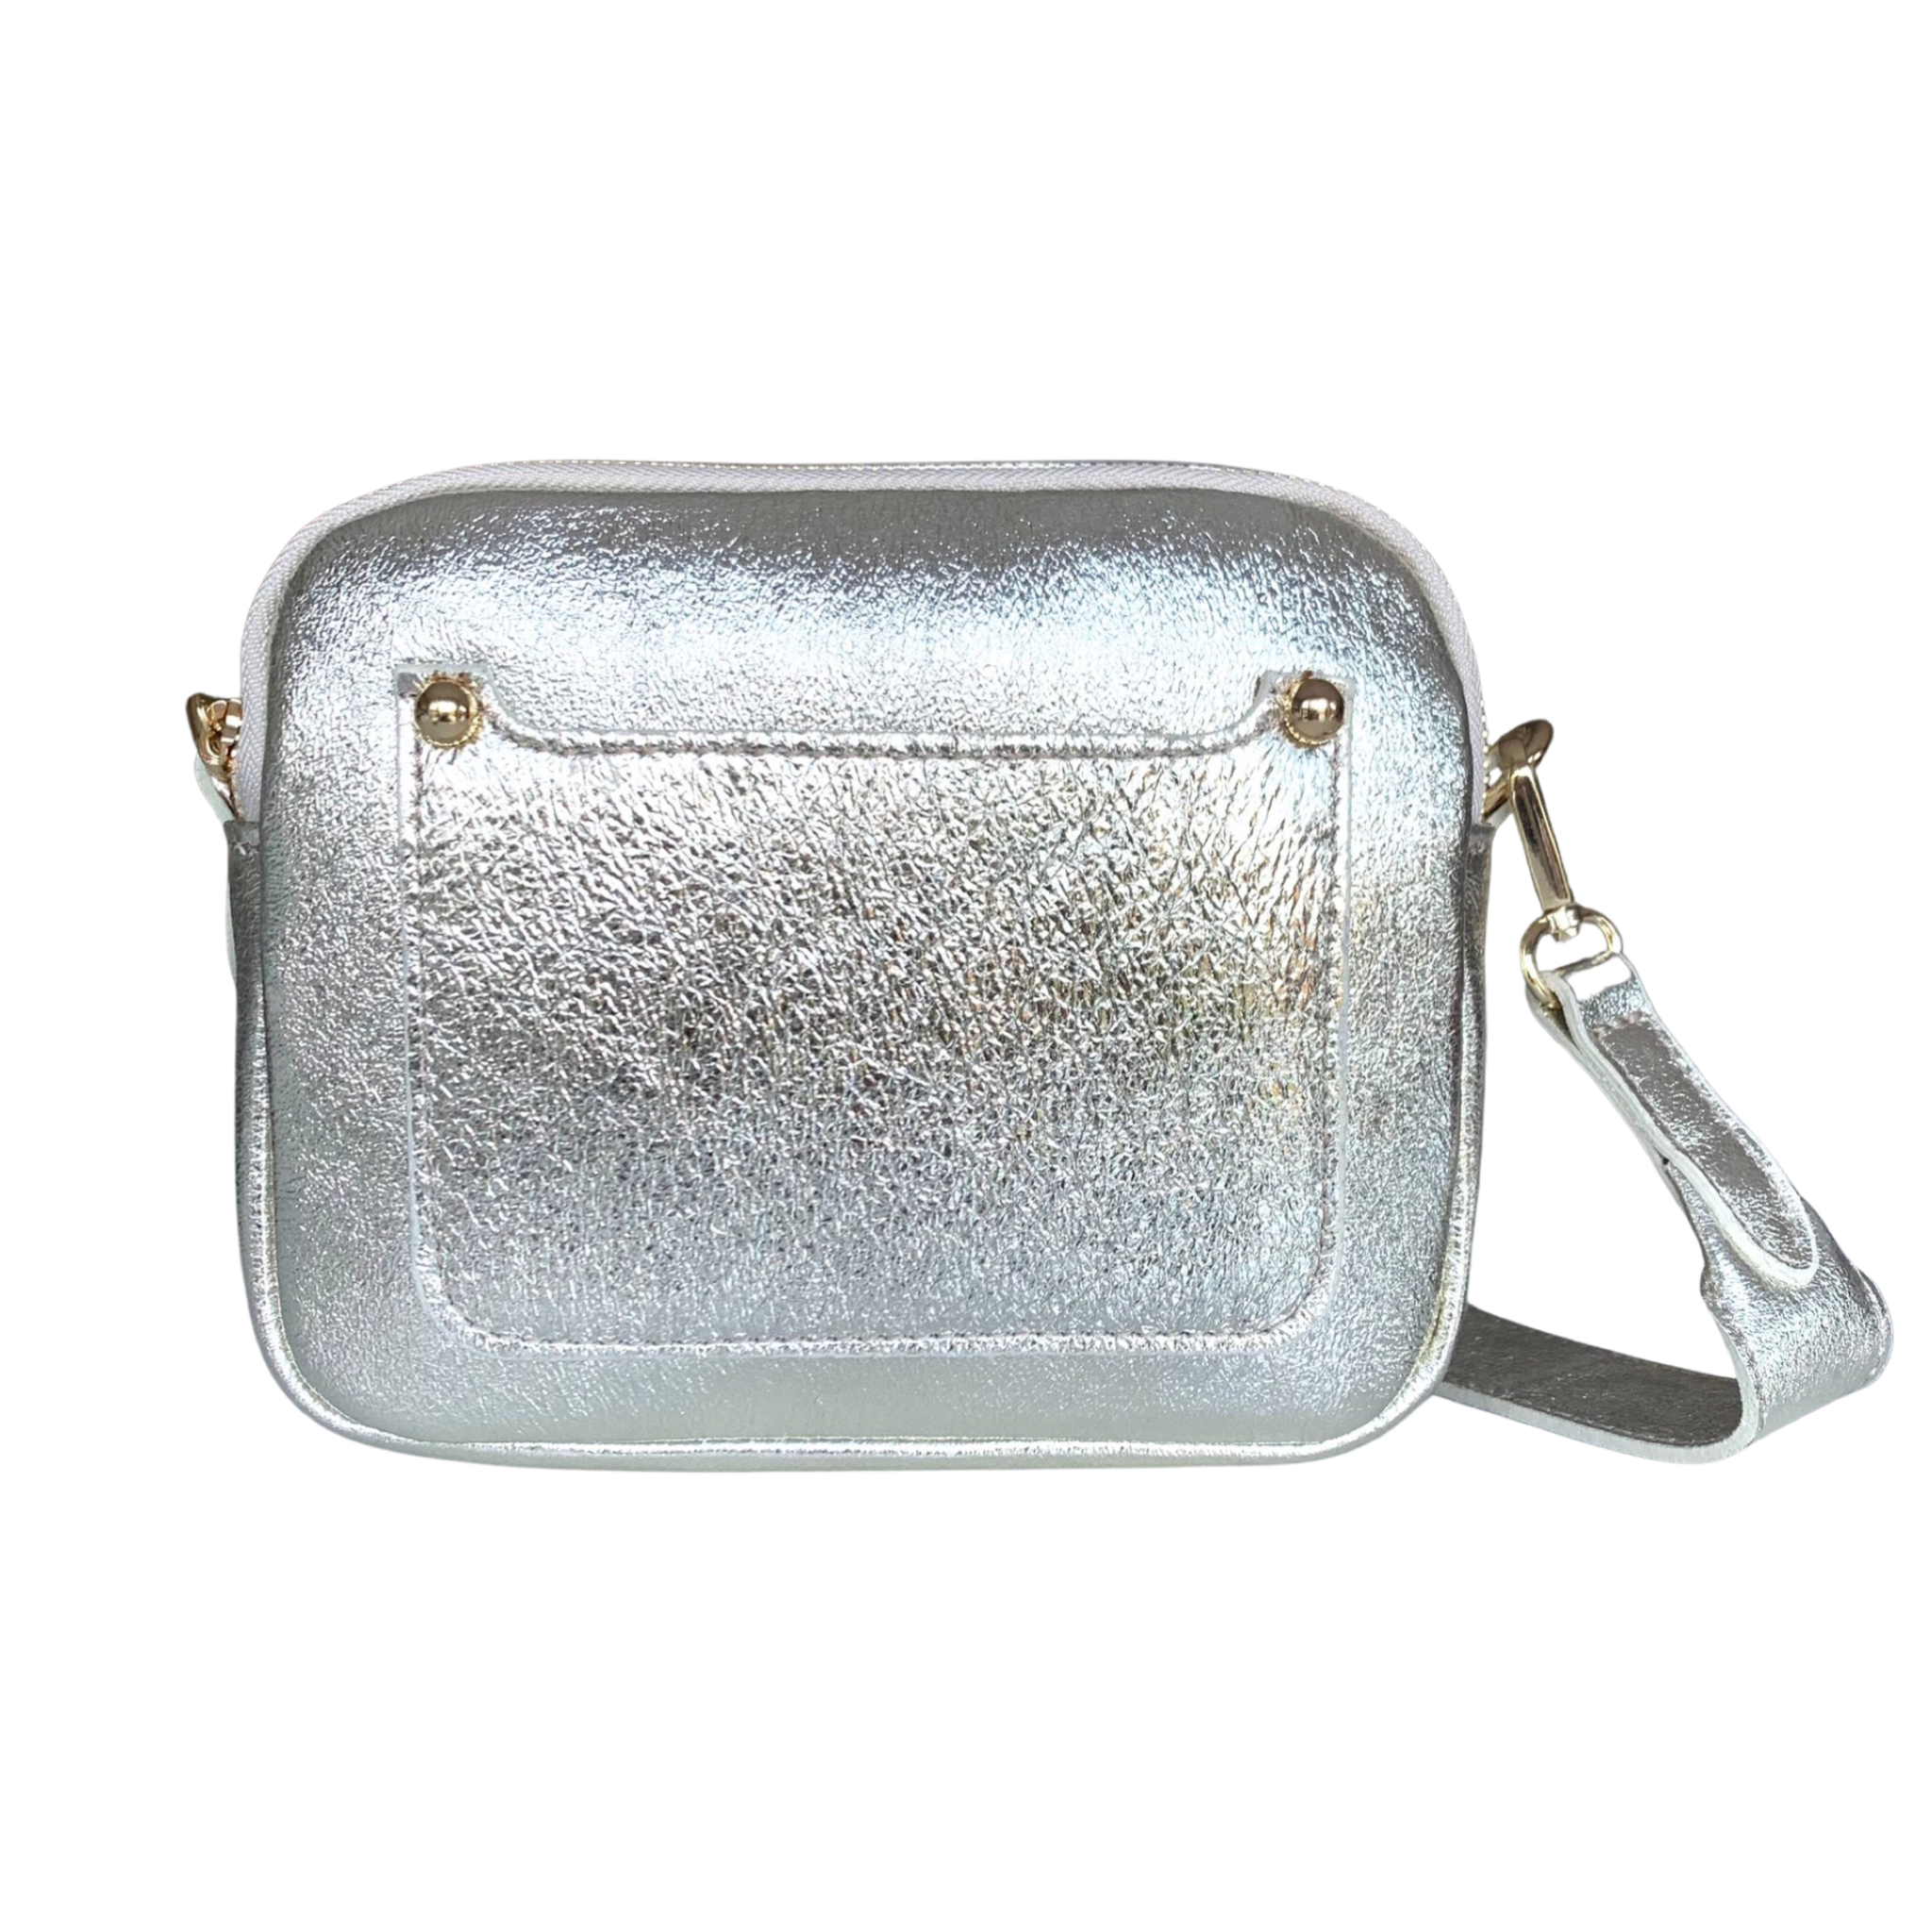 Zara Leather Crossbody Bag -  Silver